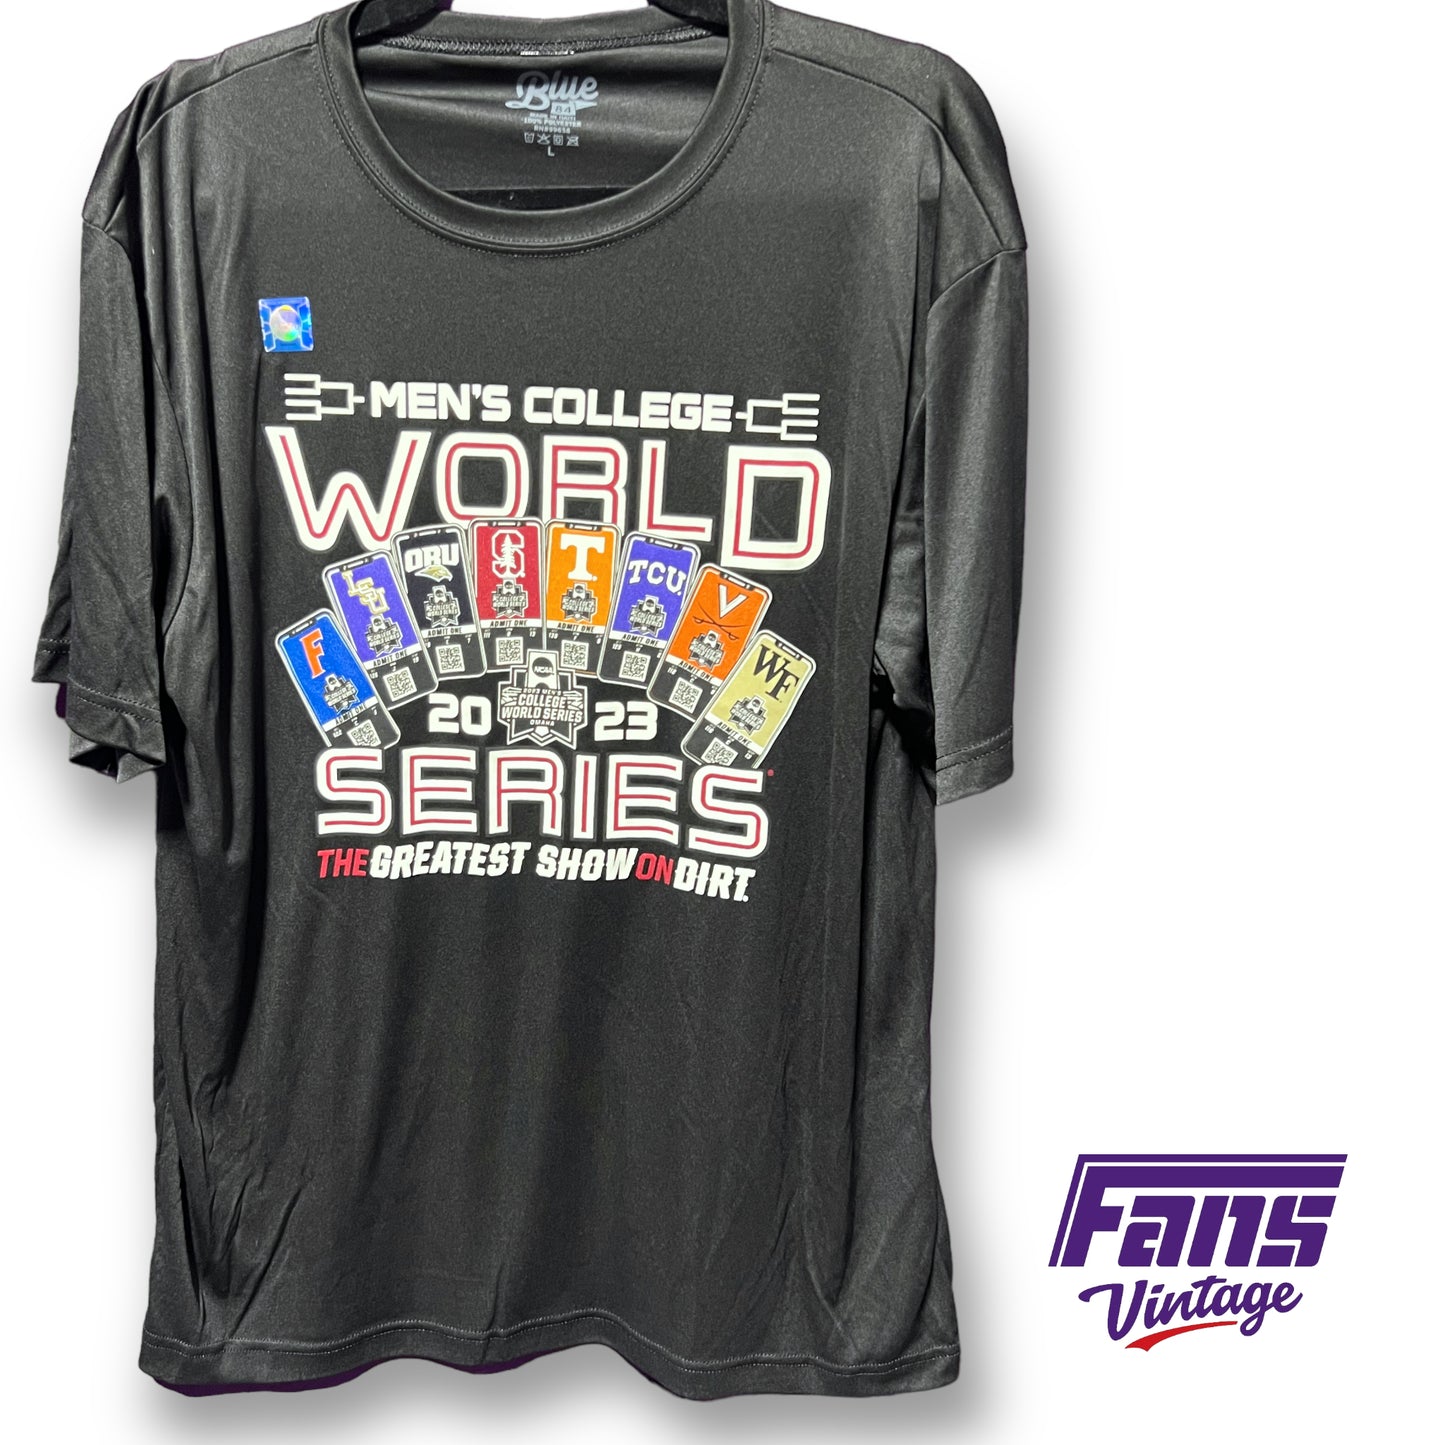 Limited Edition! CWS 2023 Tournament Tee - TCU Baseball College World Series bracket shirt